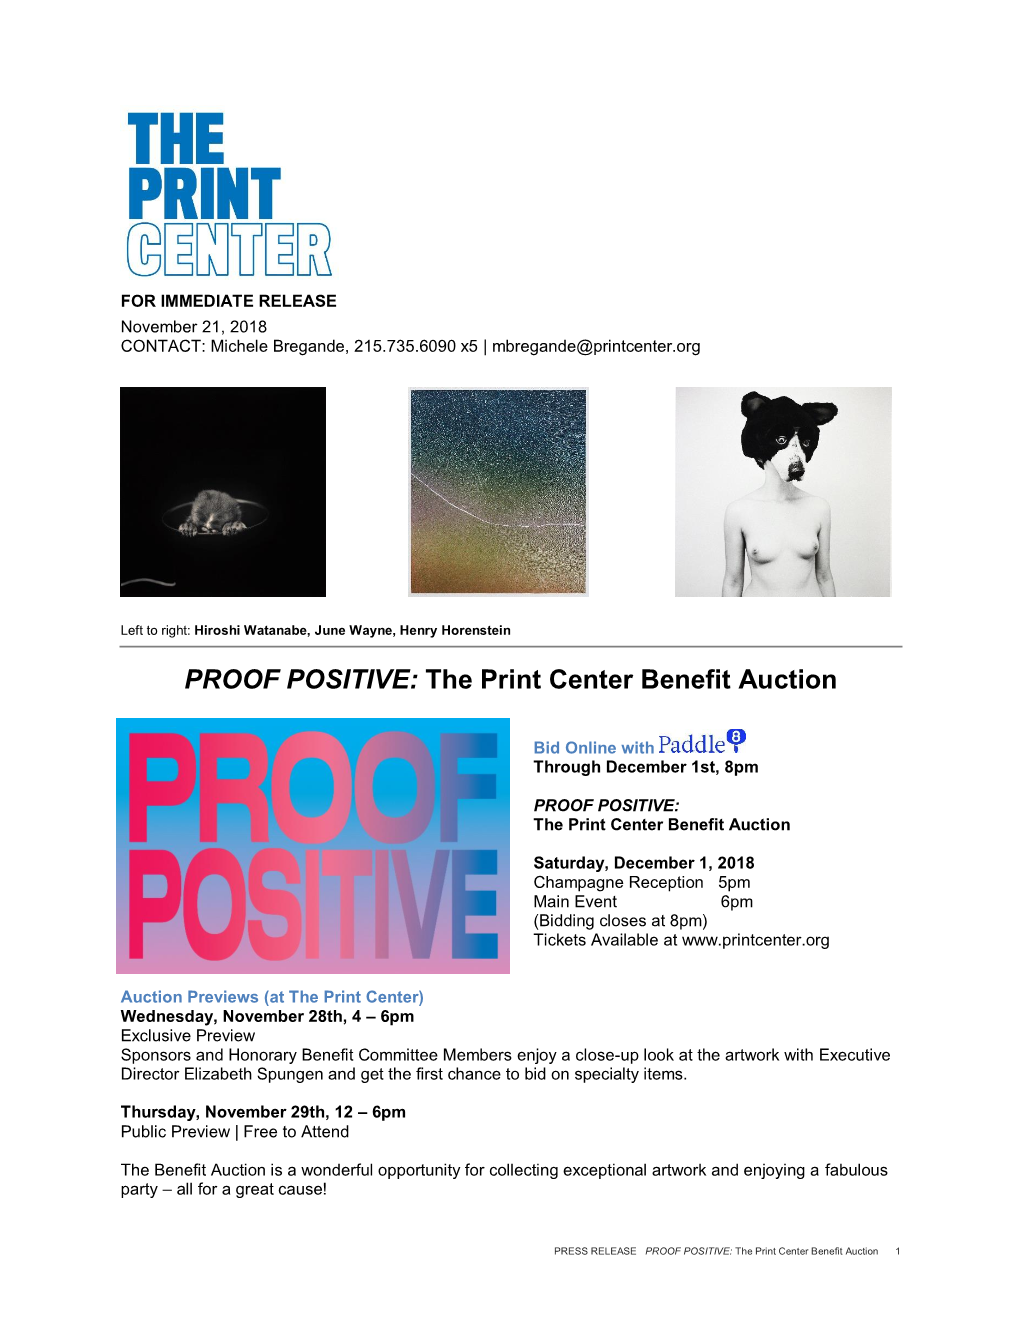 PROOF POSITIVE: the Print Center Benefit Auction